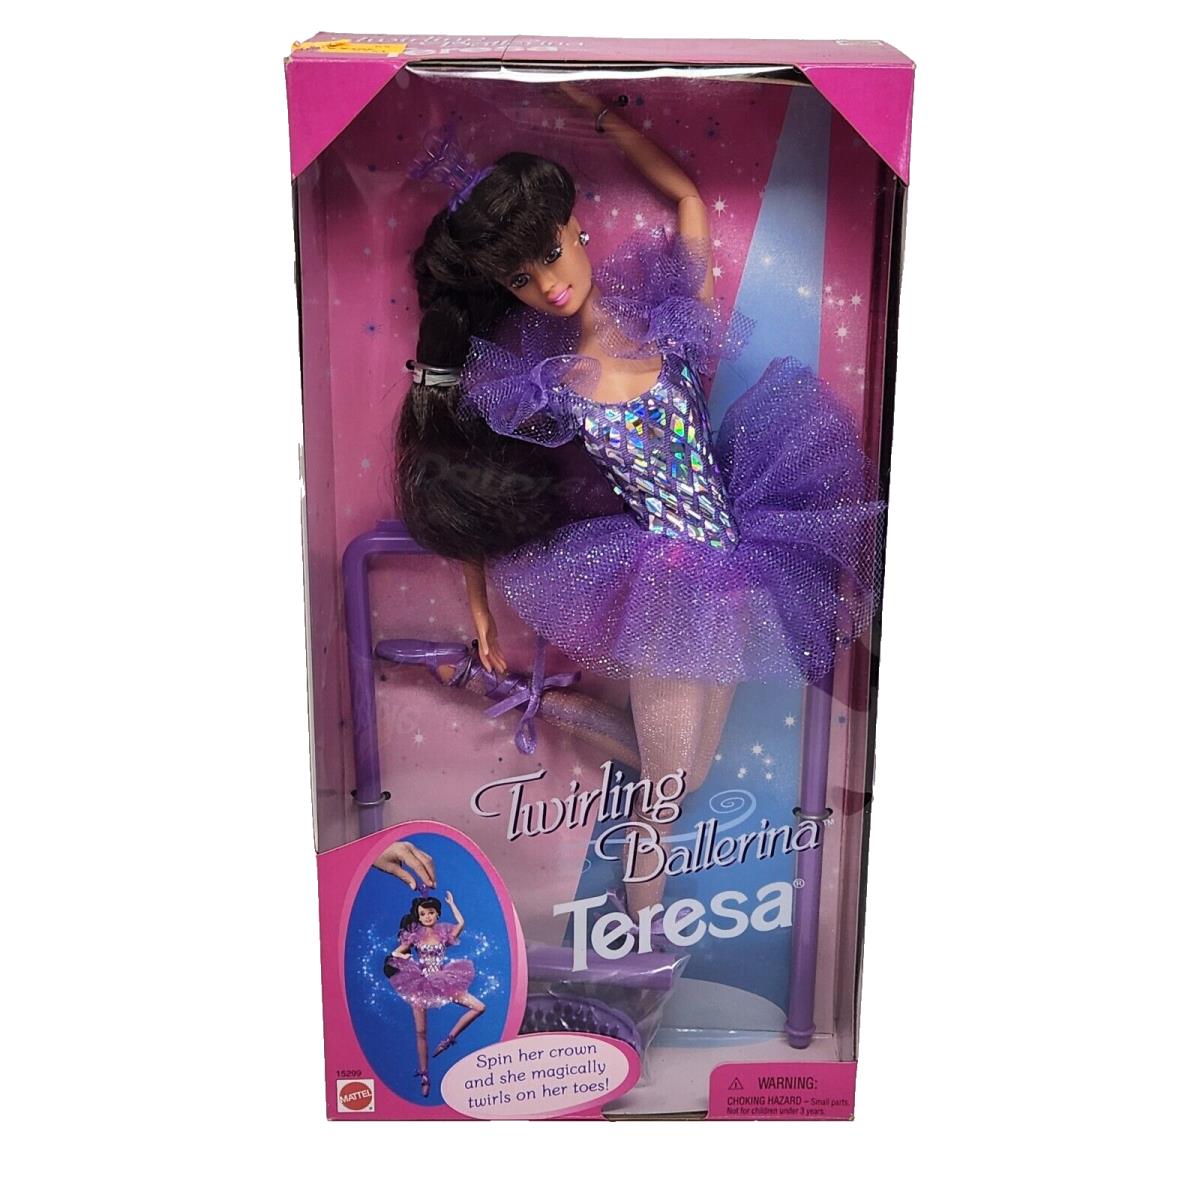 Vintage 1995 Twirling Ballerina Teresa Barbie Doll Mattel Box 15299